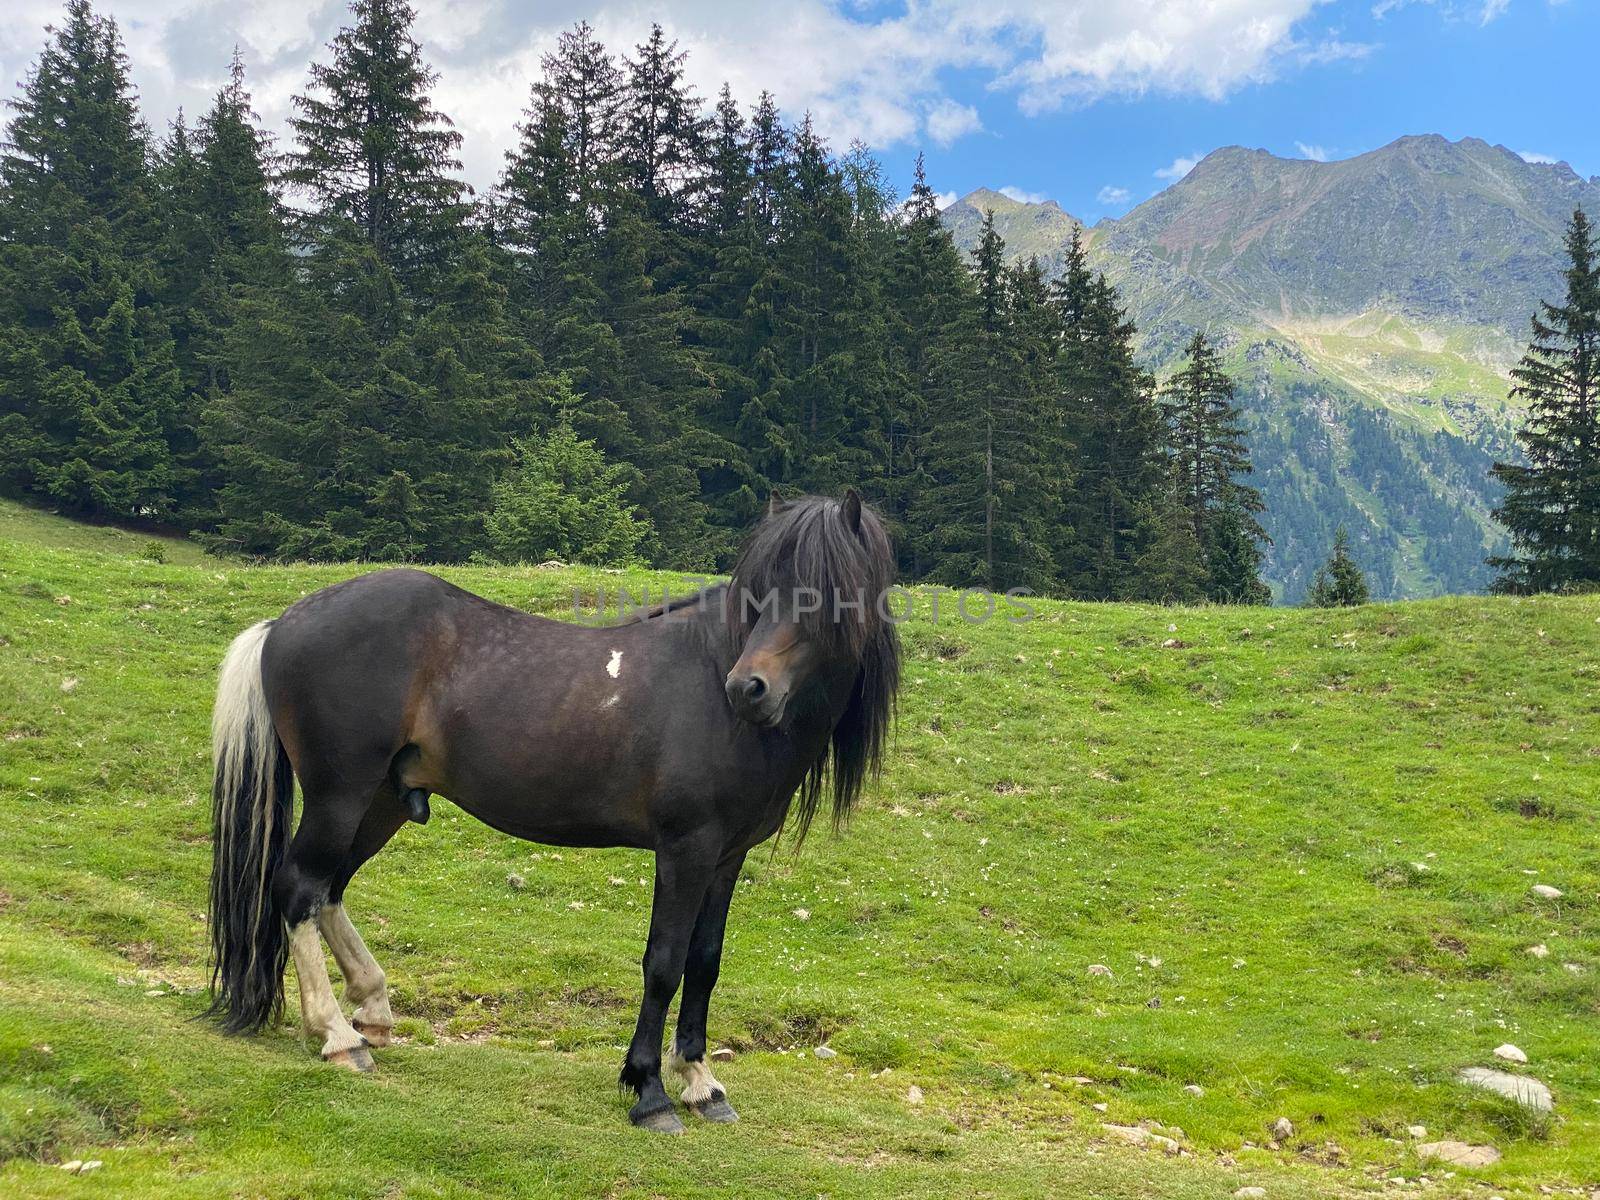 The horse on the pasture, Duisitzkarsee Lake, Austria. by CaptureLight